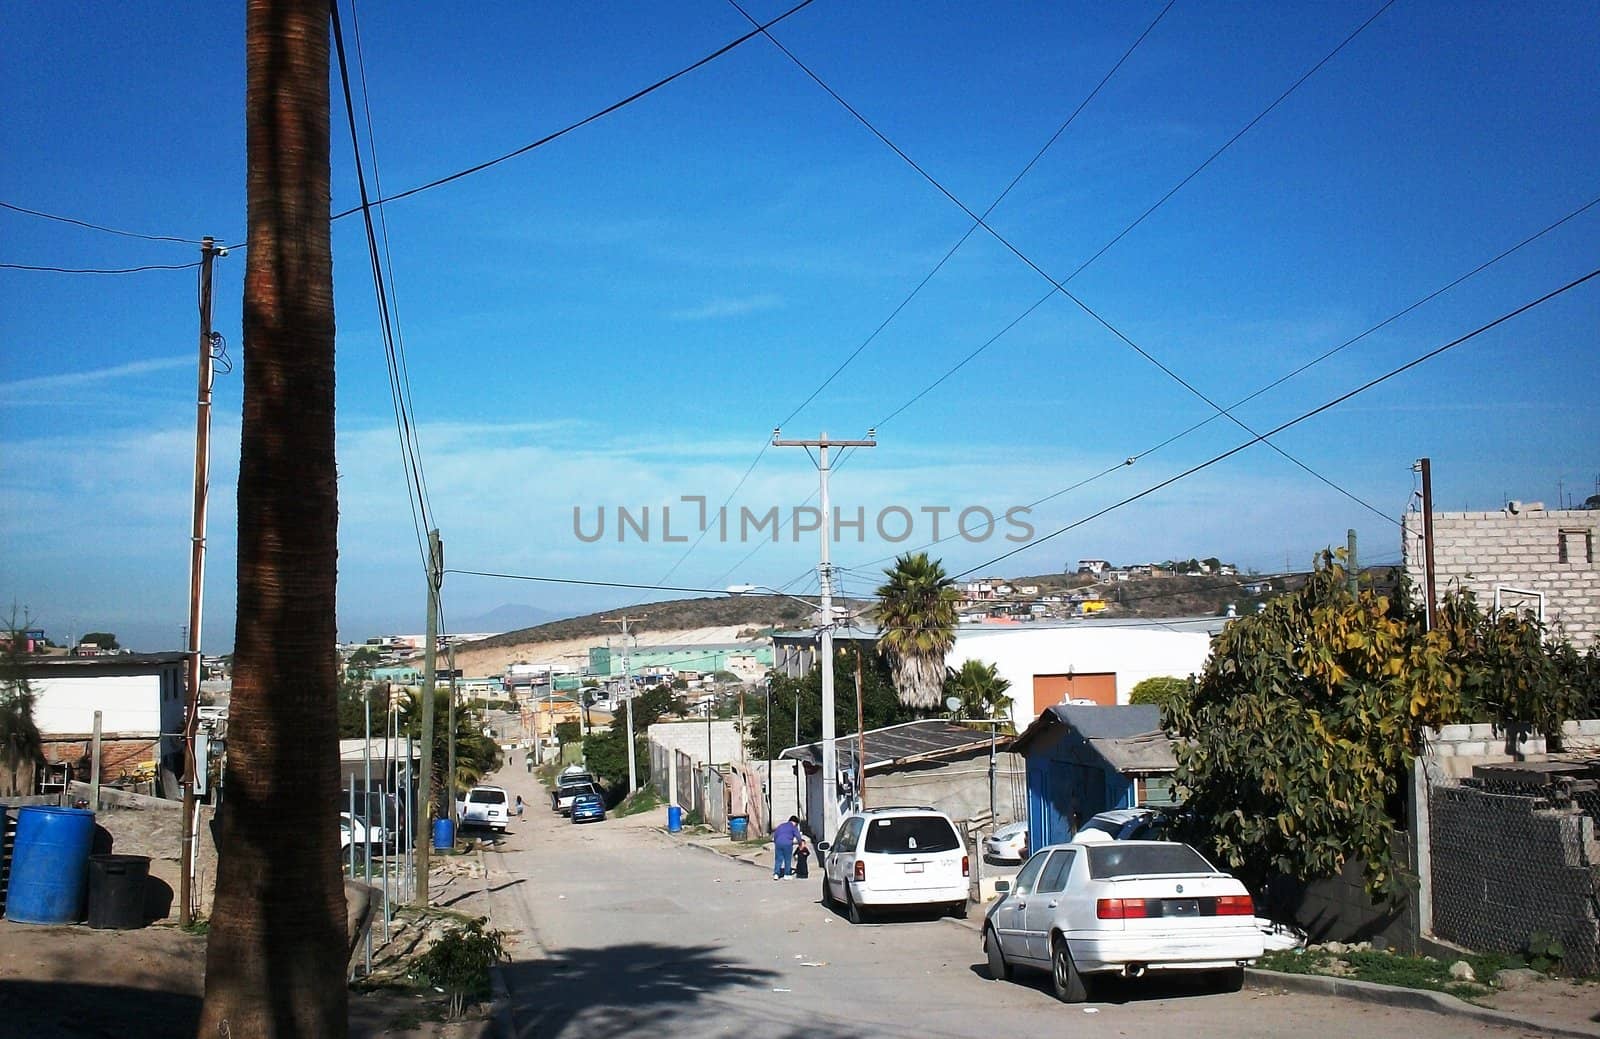 Tijuana Street View by RefocusPhoto